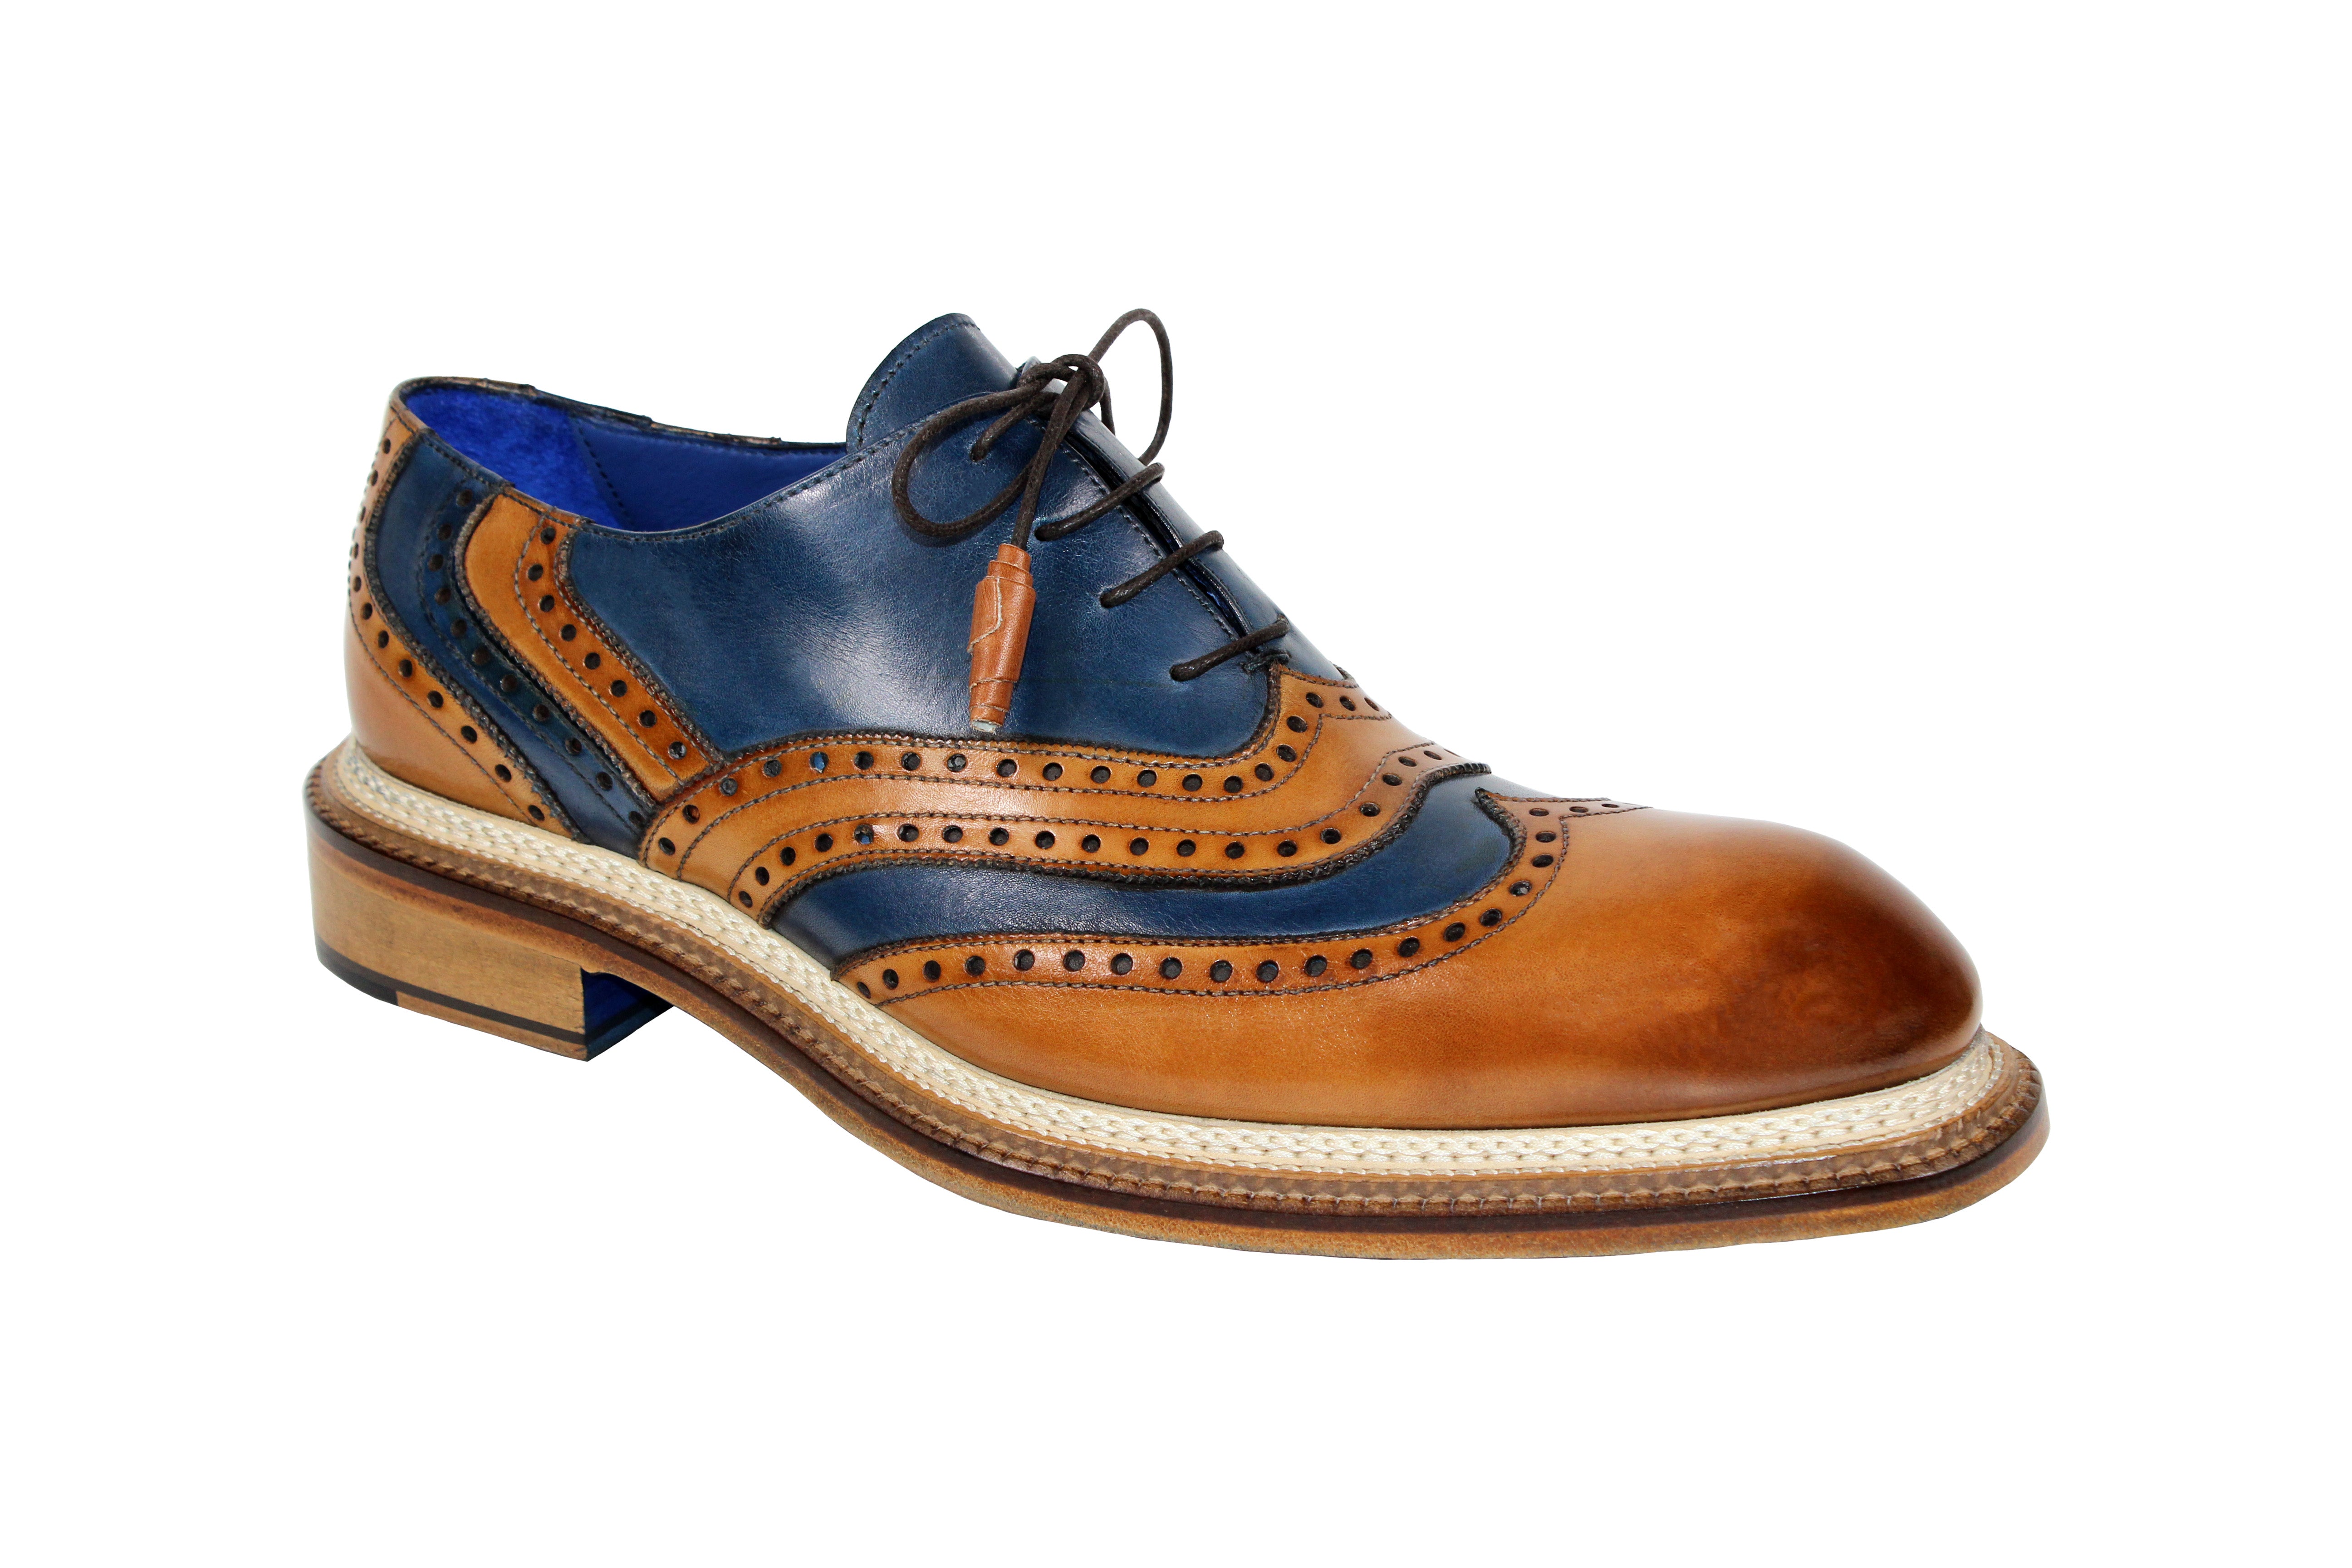 Emilio Franco "Mattia" Cognac/Navy Shoes